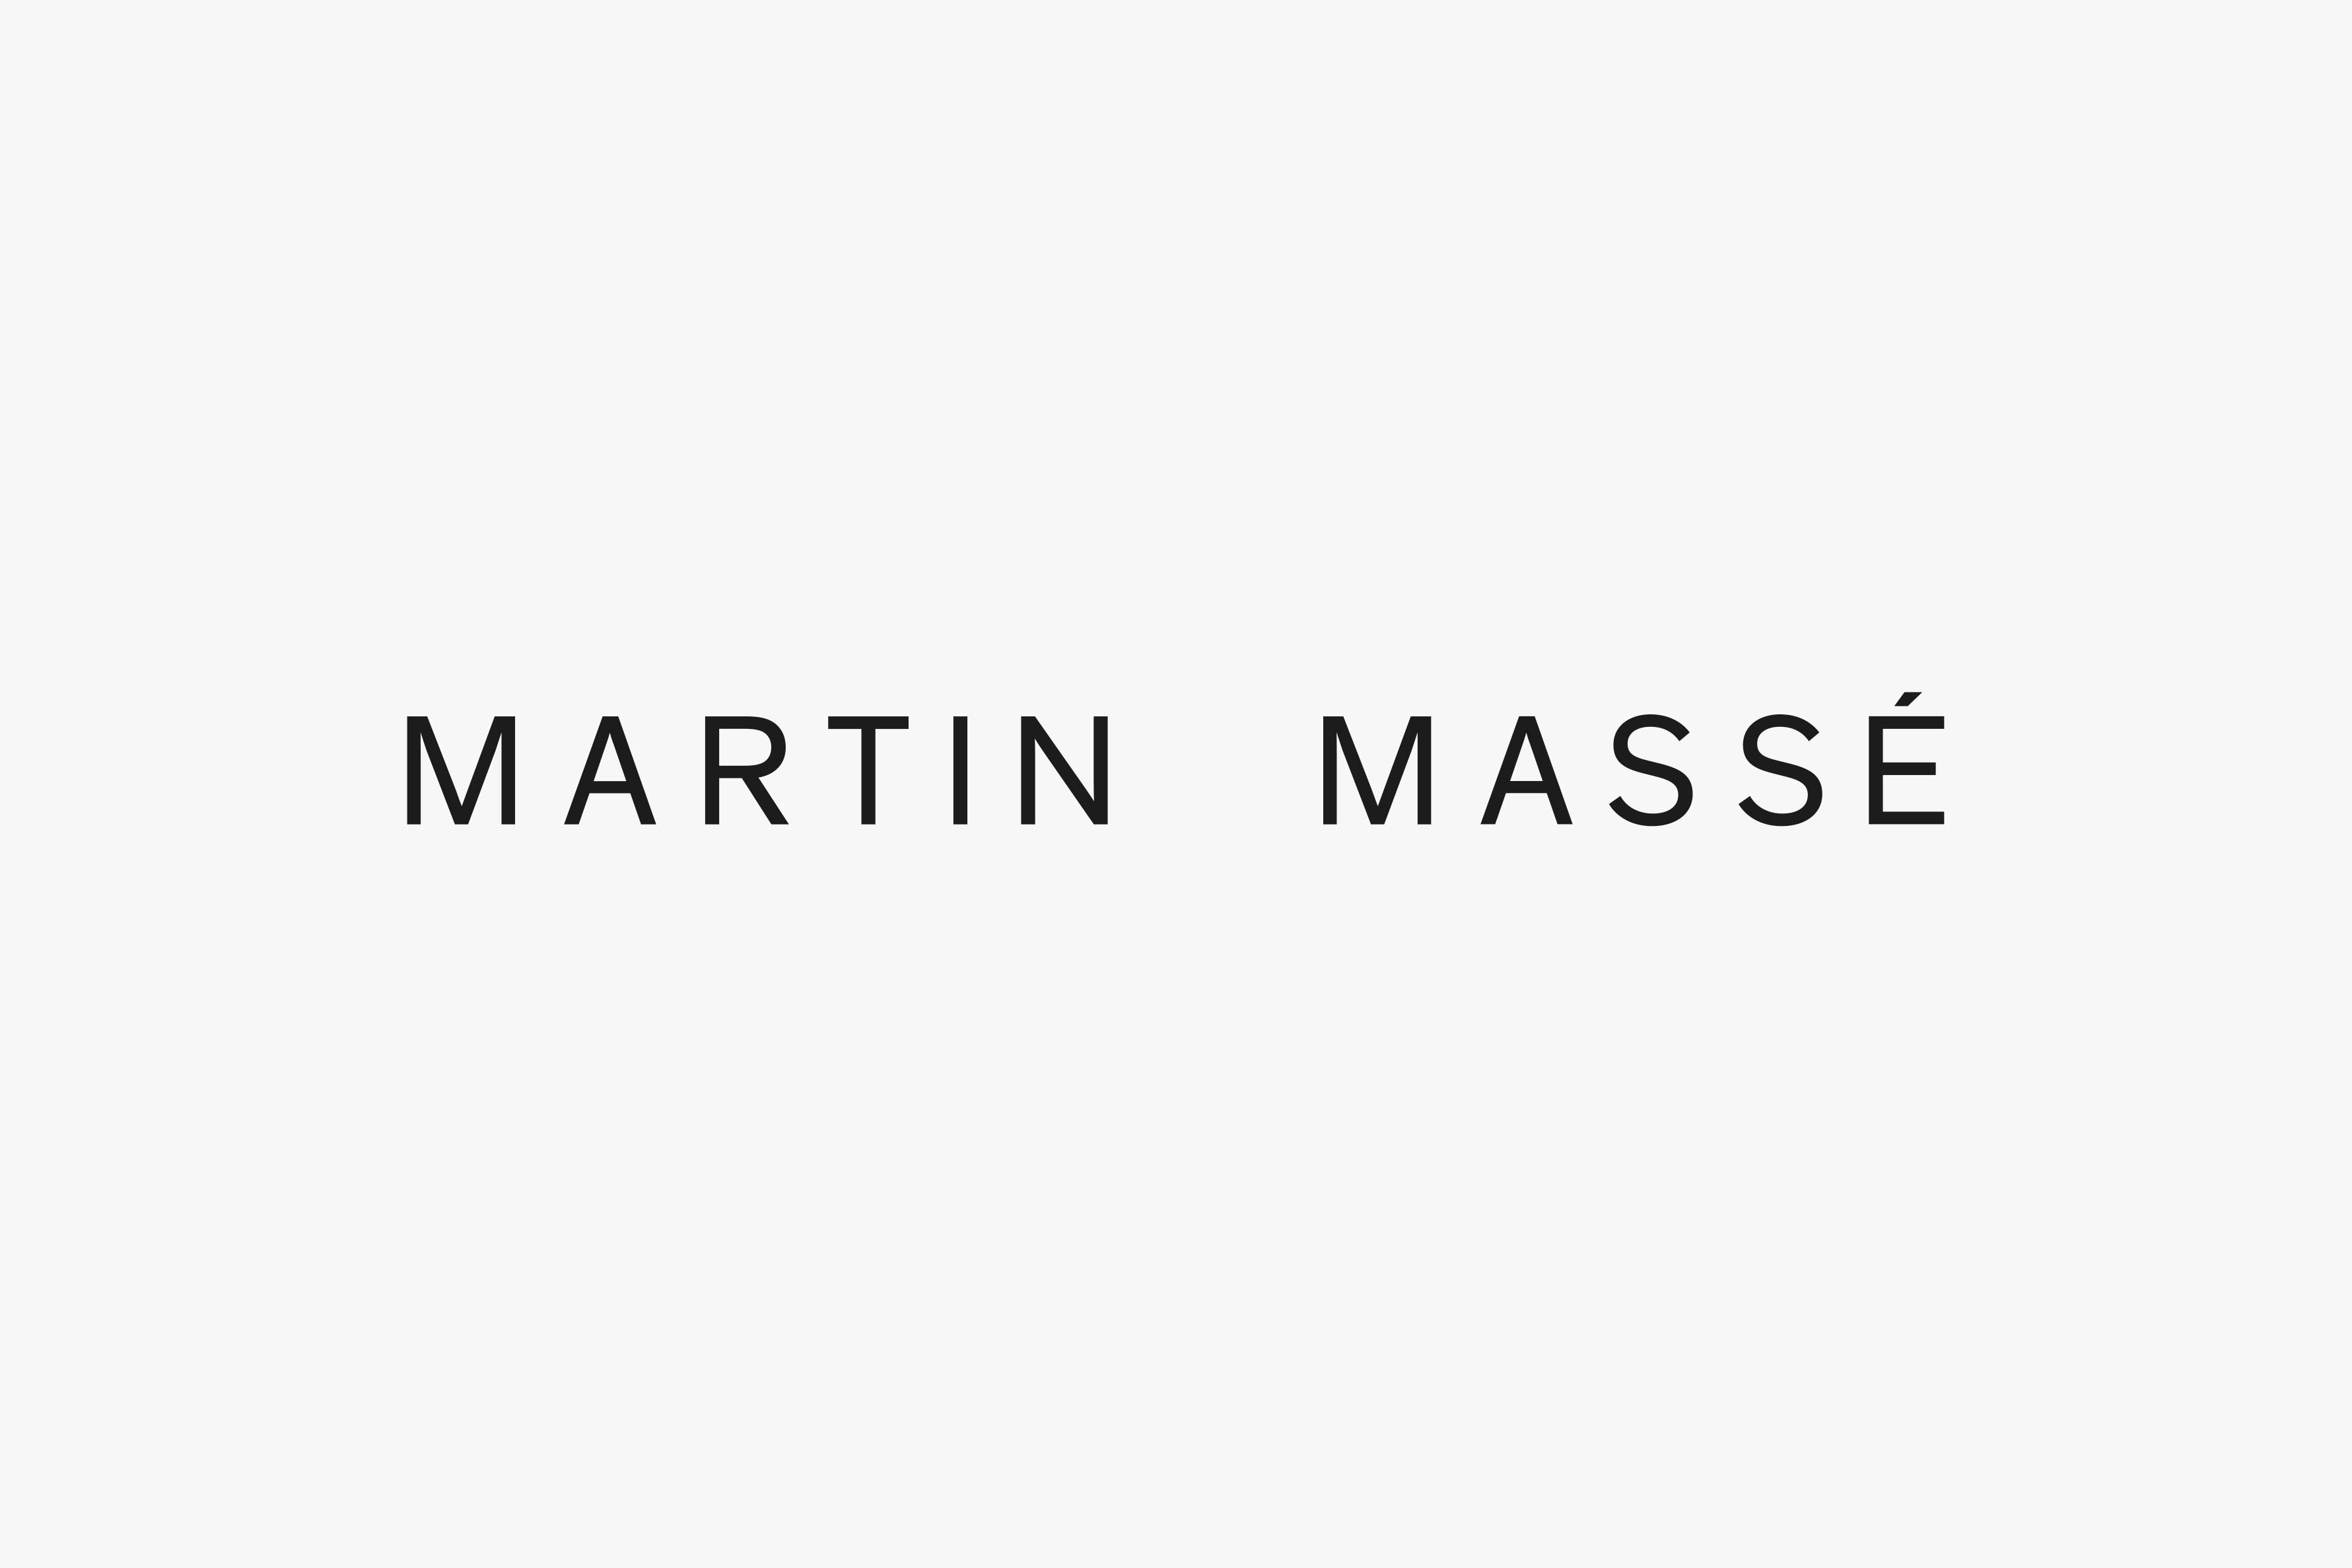 Studio Mitsu for Martin Masse Architect and designer. 
Logotype, graphic design, visual identity, business card, stationary, typography, design.